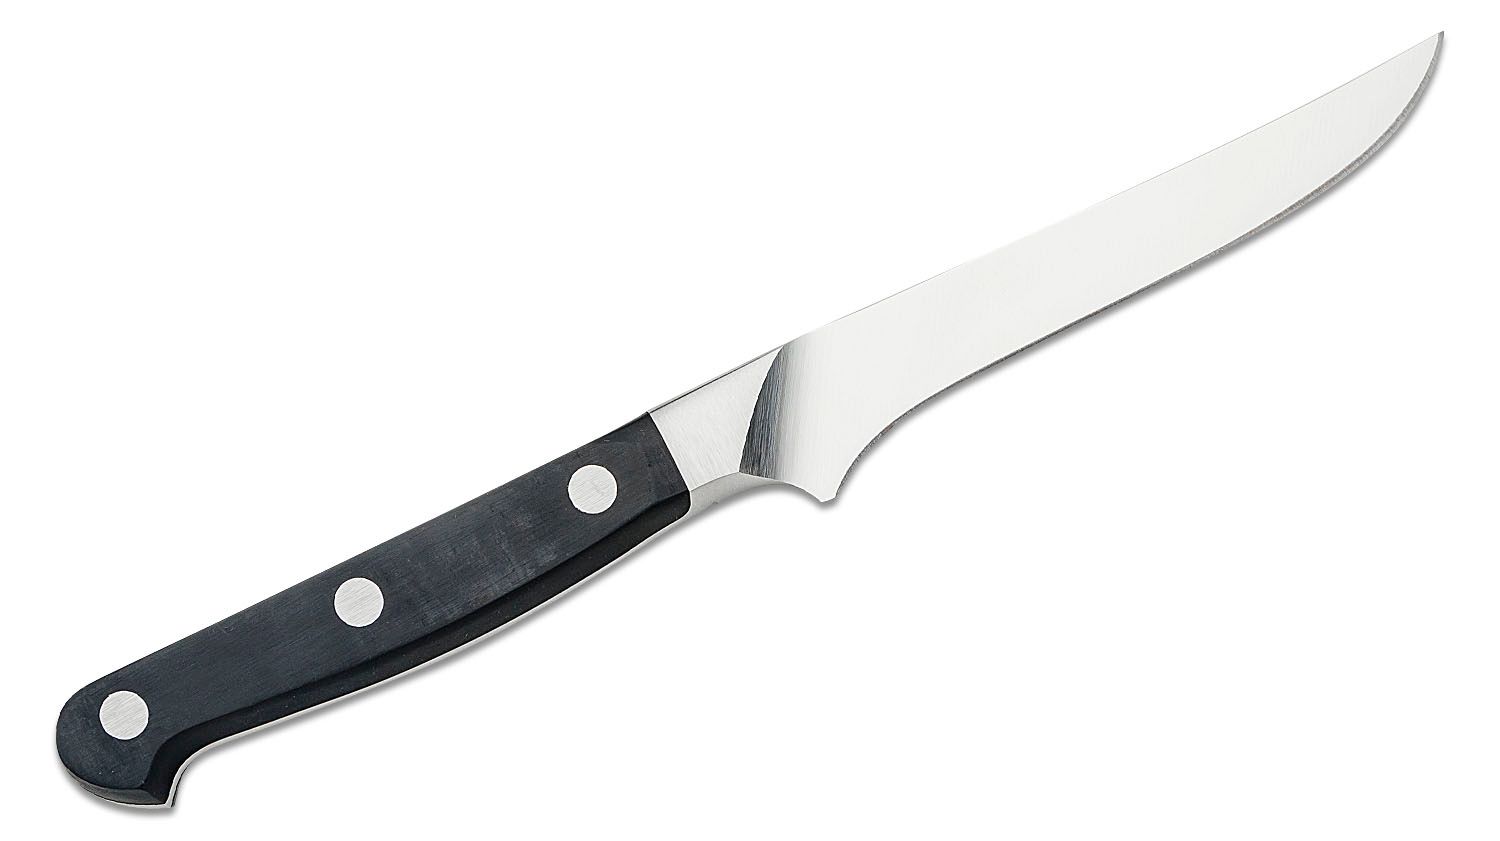 Zwilling Pro steak knife set, 38430-002  Advantageously shopping at